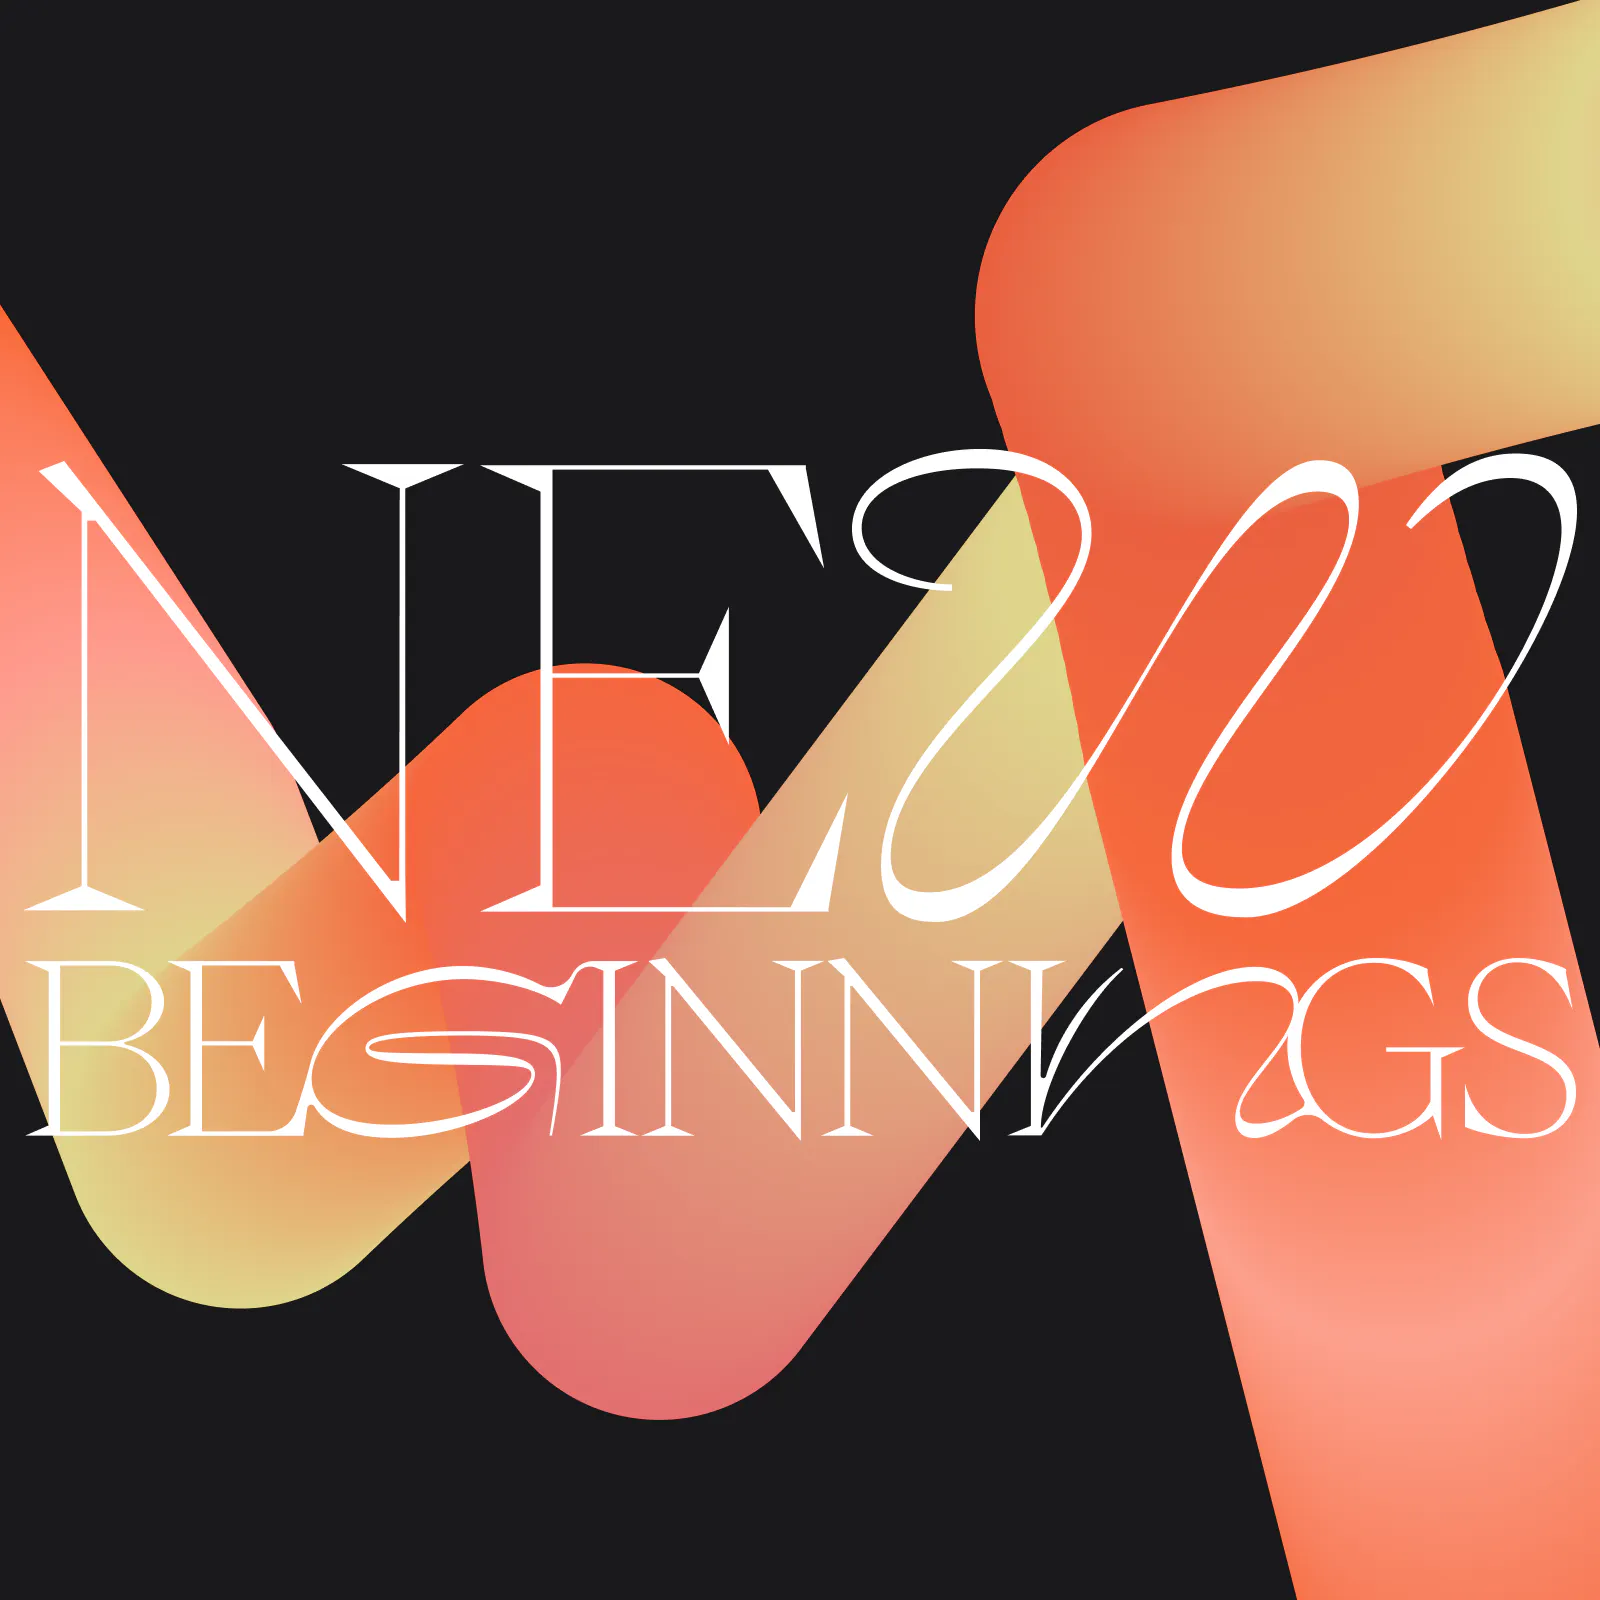 New Beginnings is white font against orange, yellow and black background -New Year, New Wonderlanders